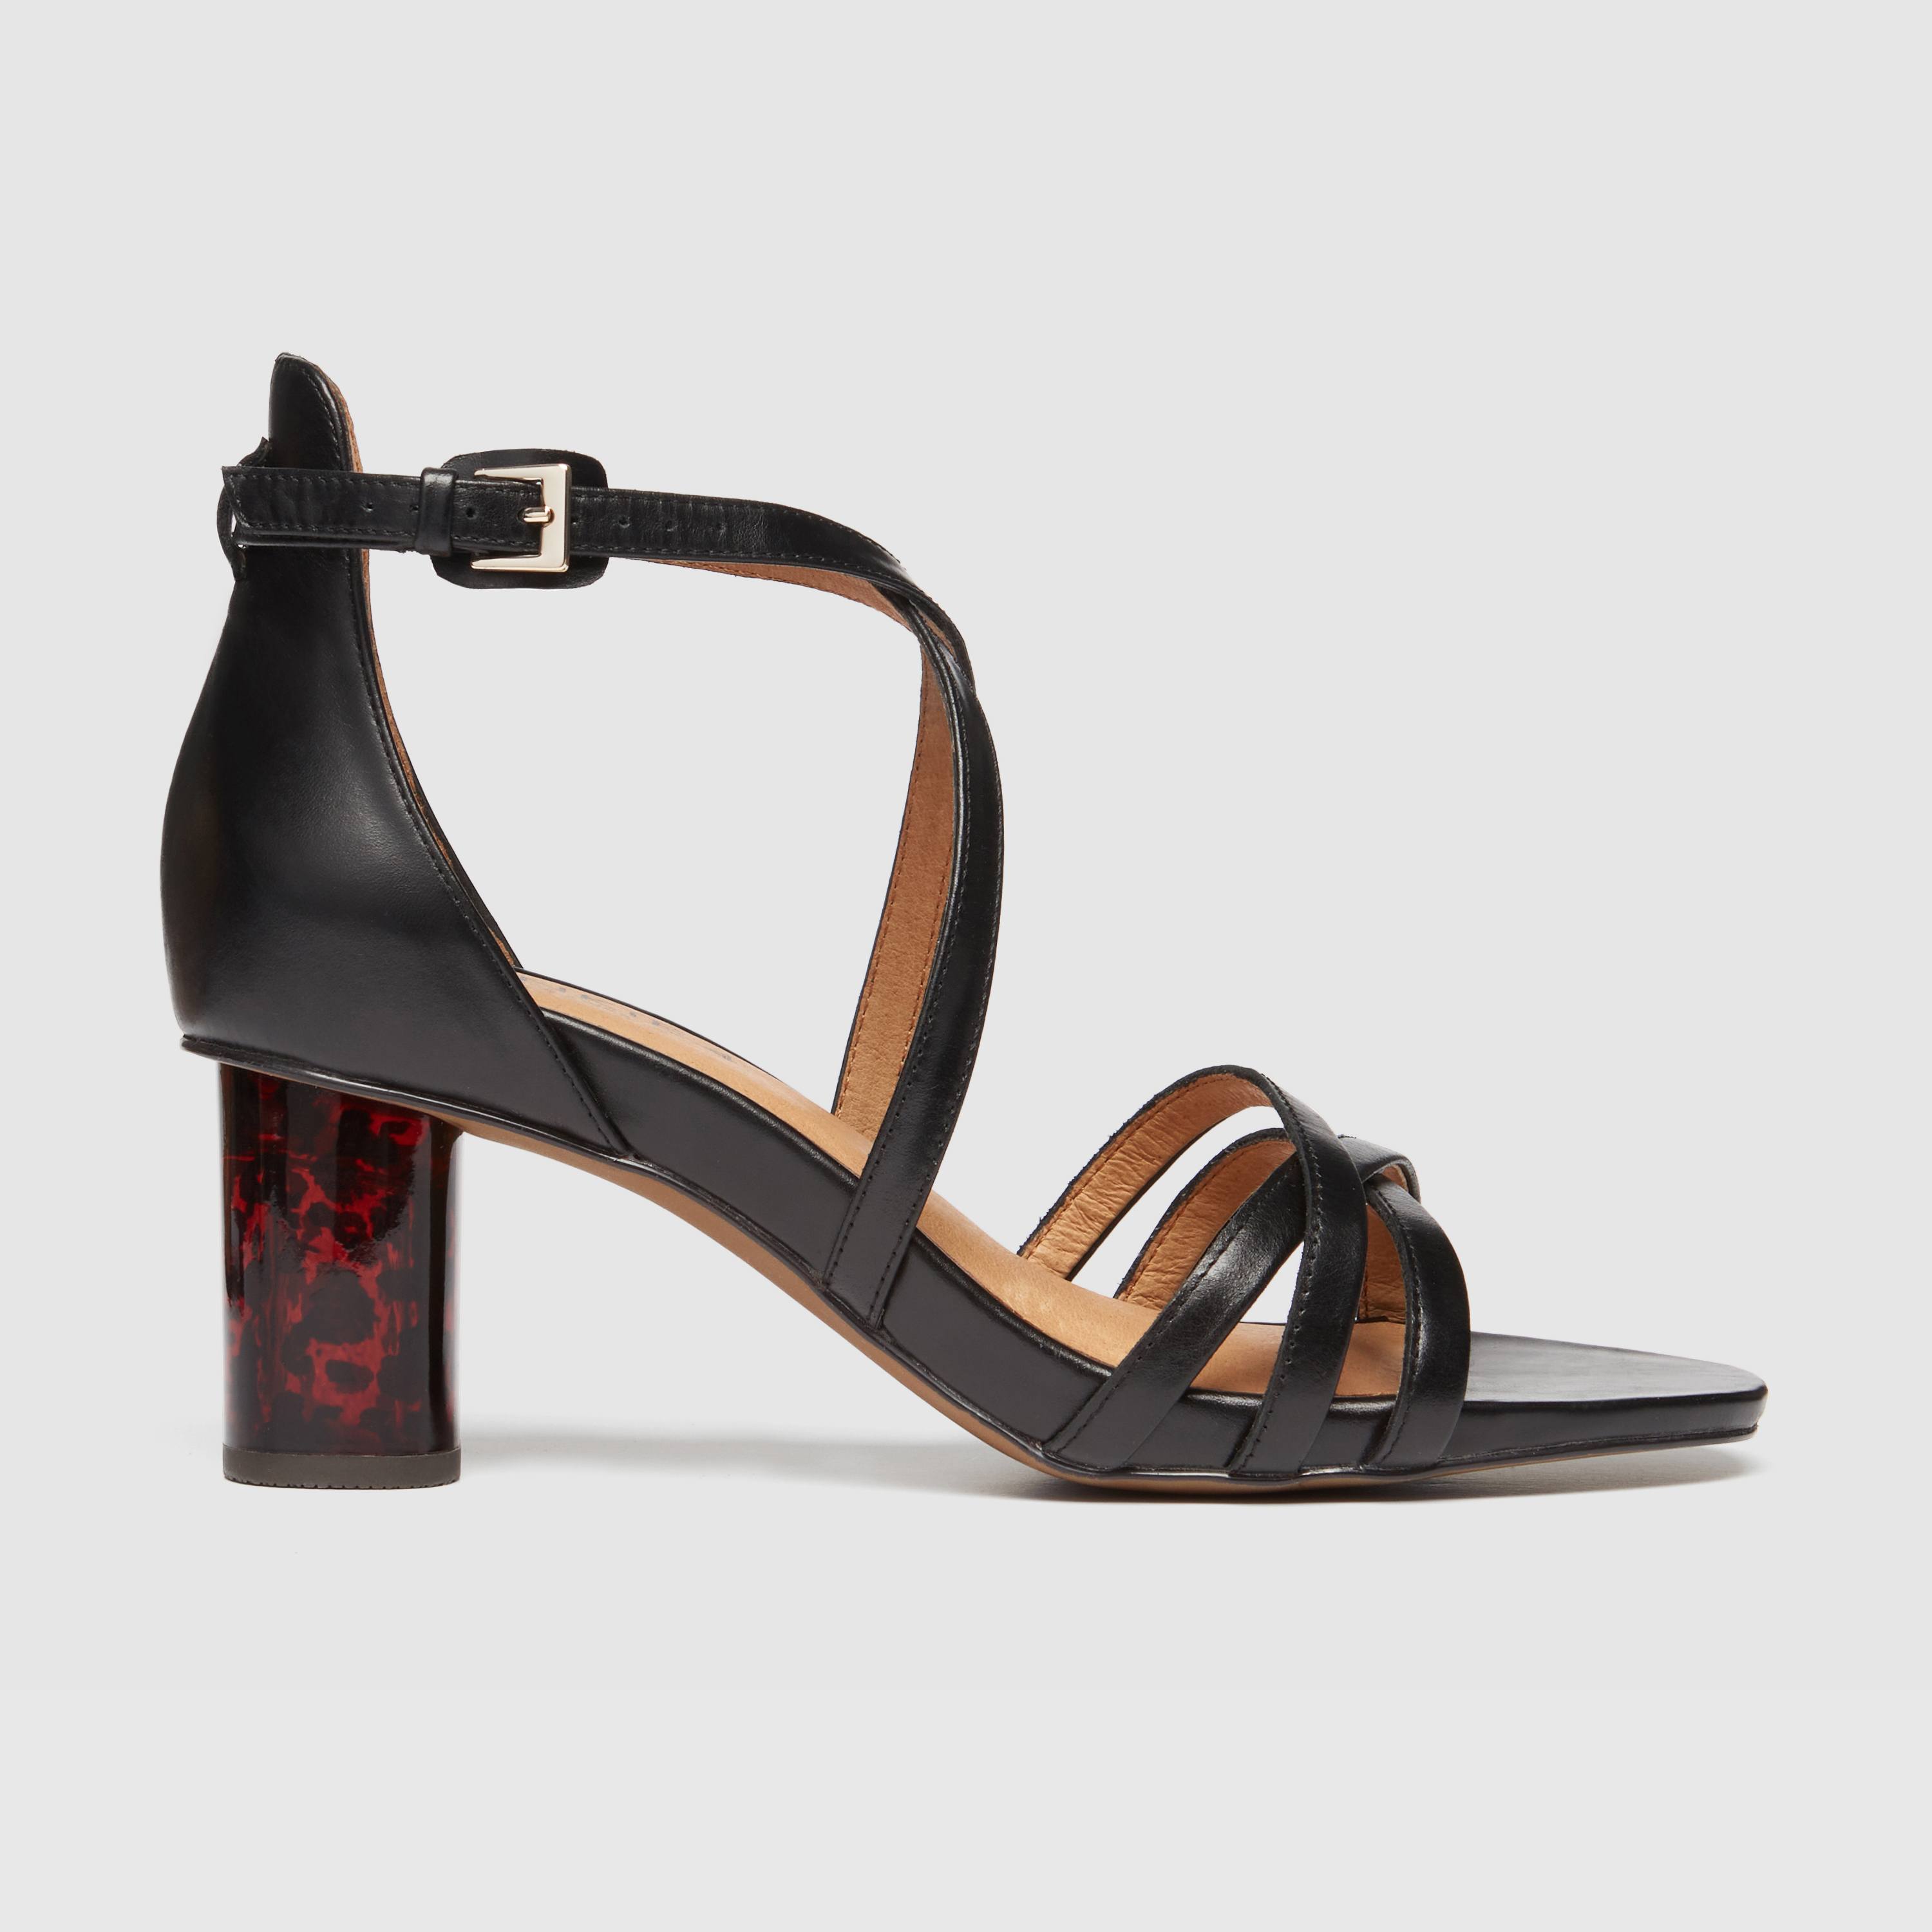 Buy Black Closed Toe Heels online | Lazada.com.ph